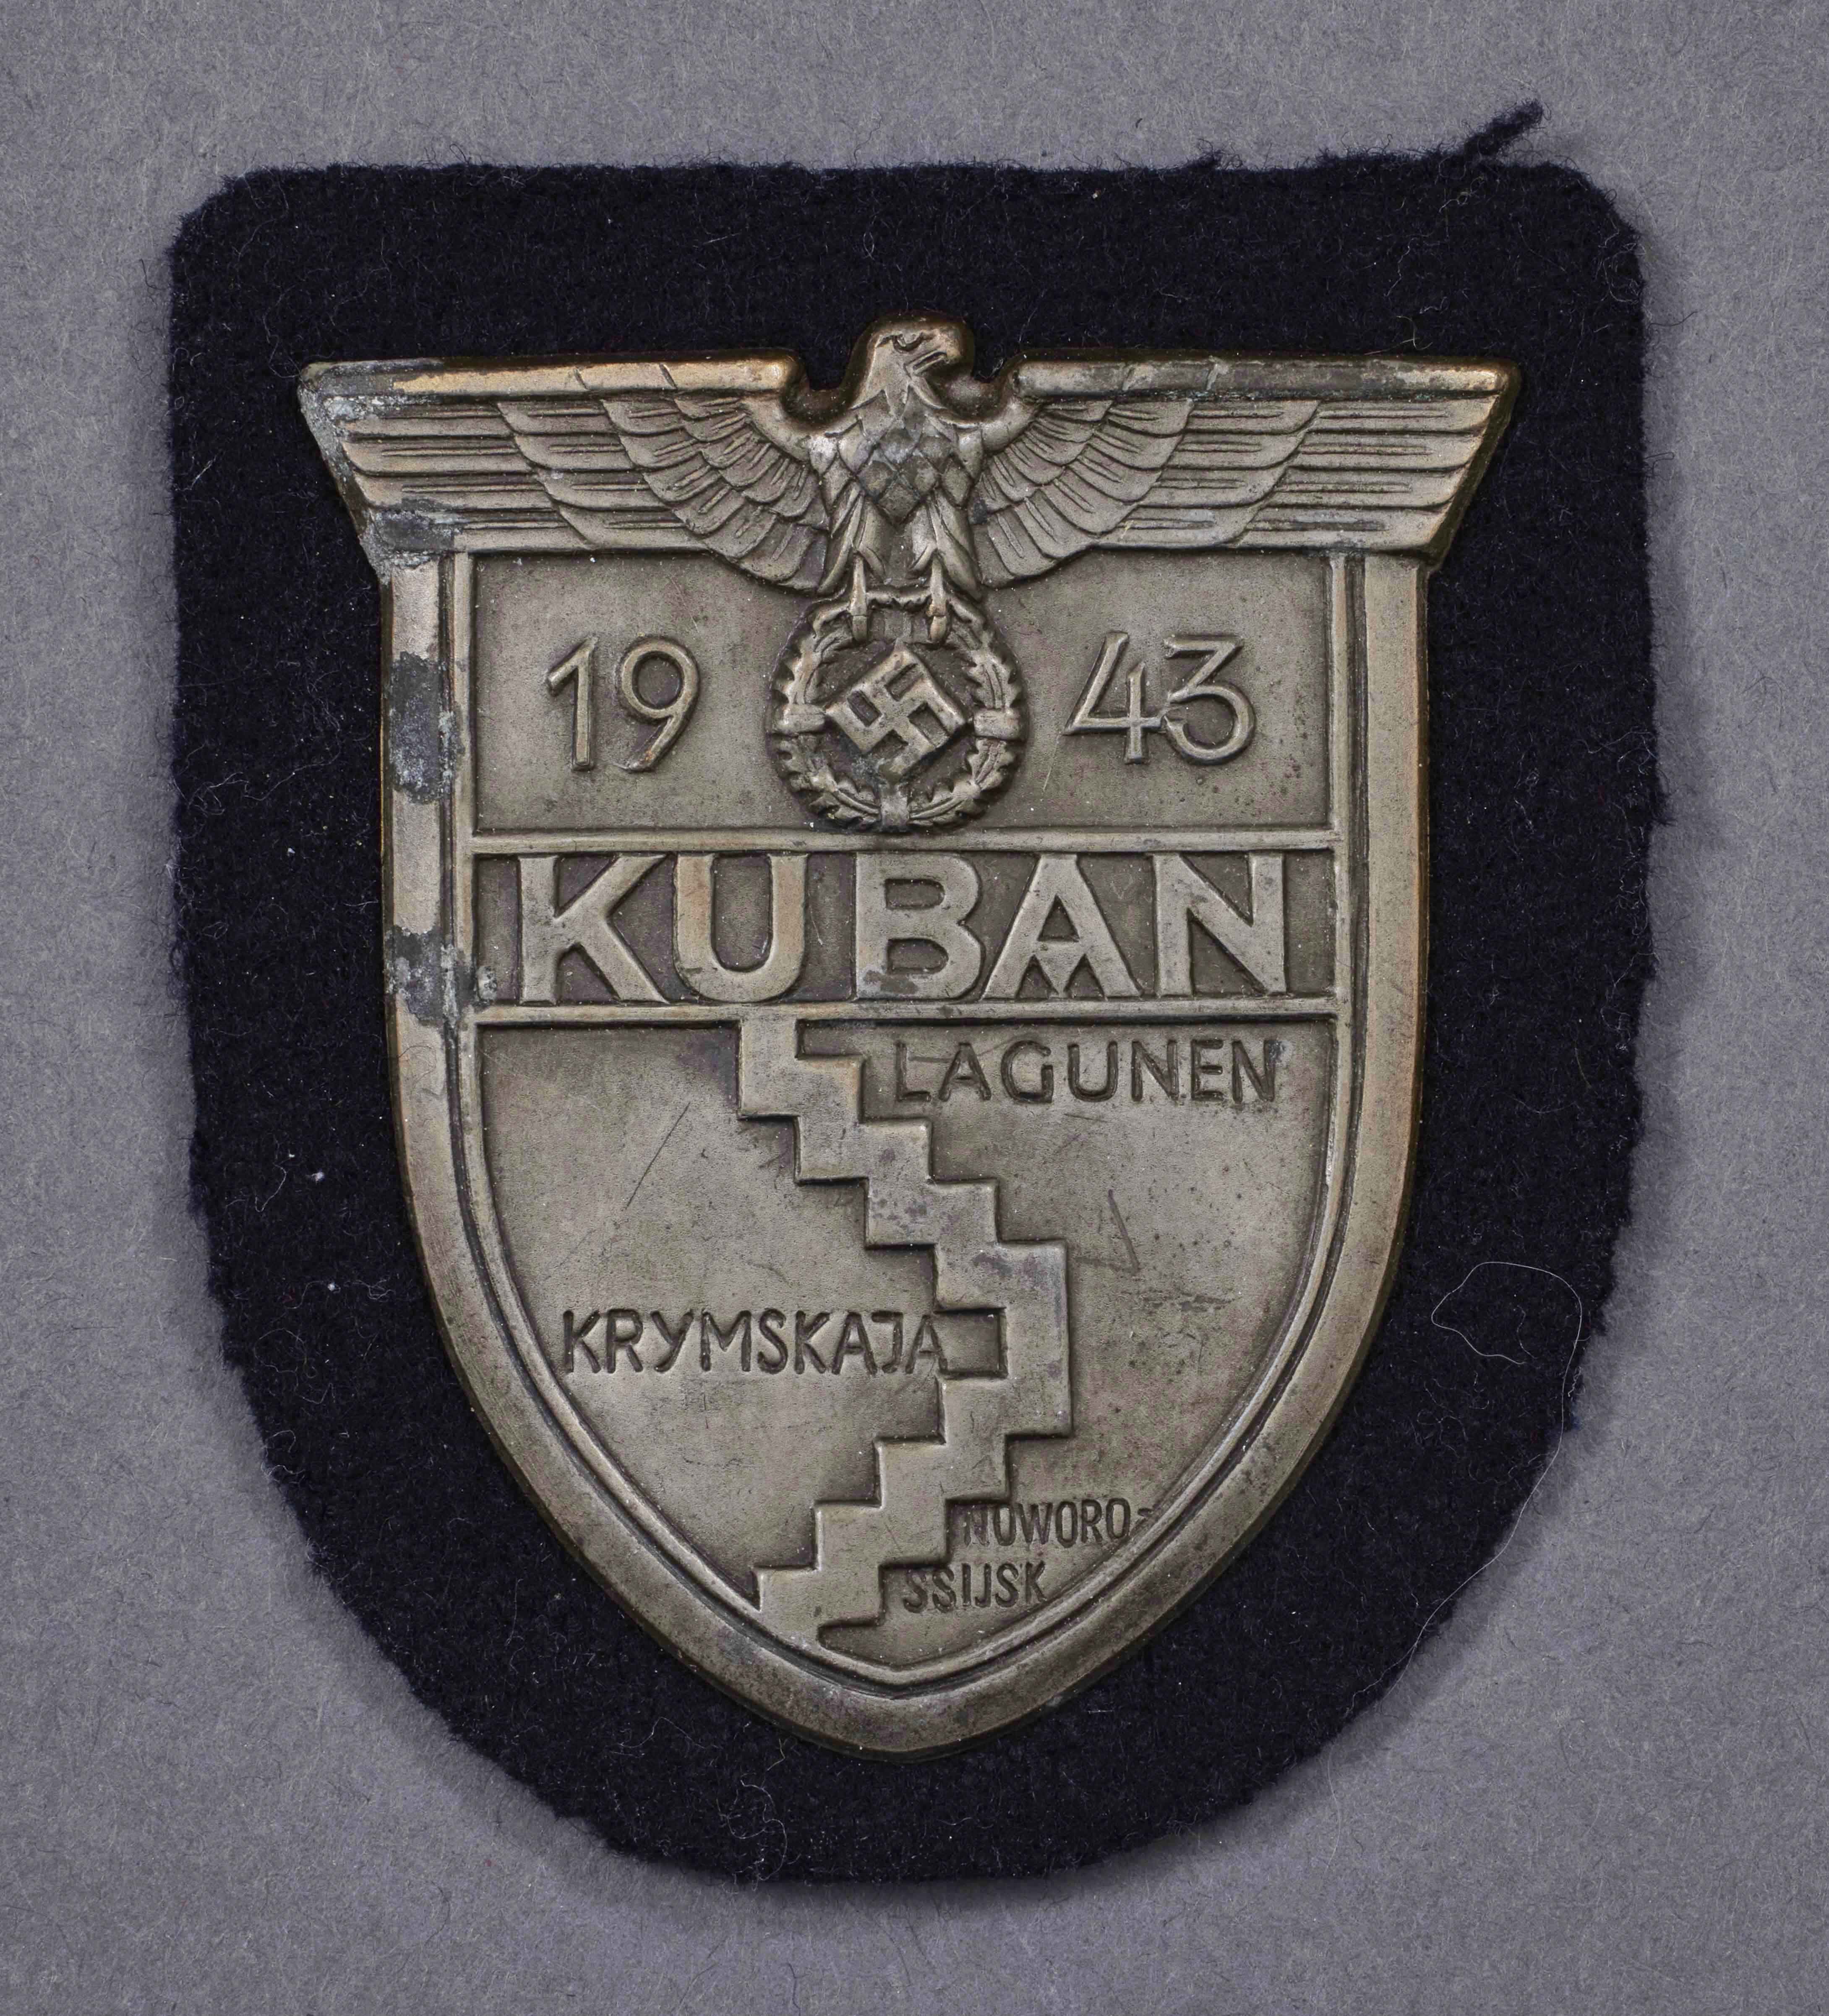 Kriegsmarine Kuban Campaign Shield